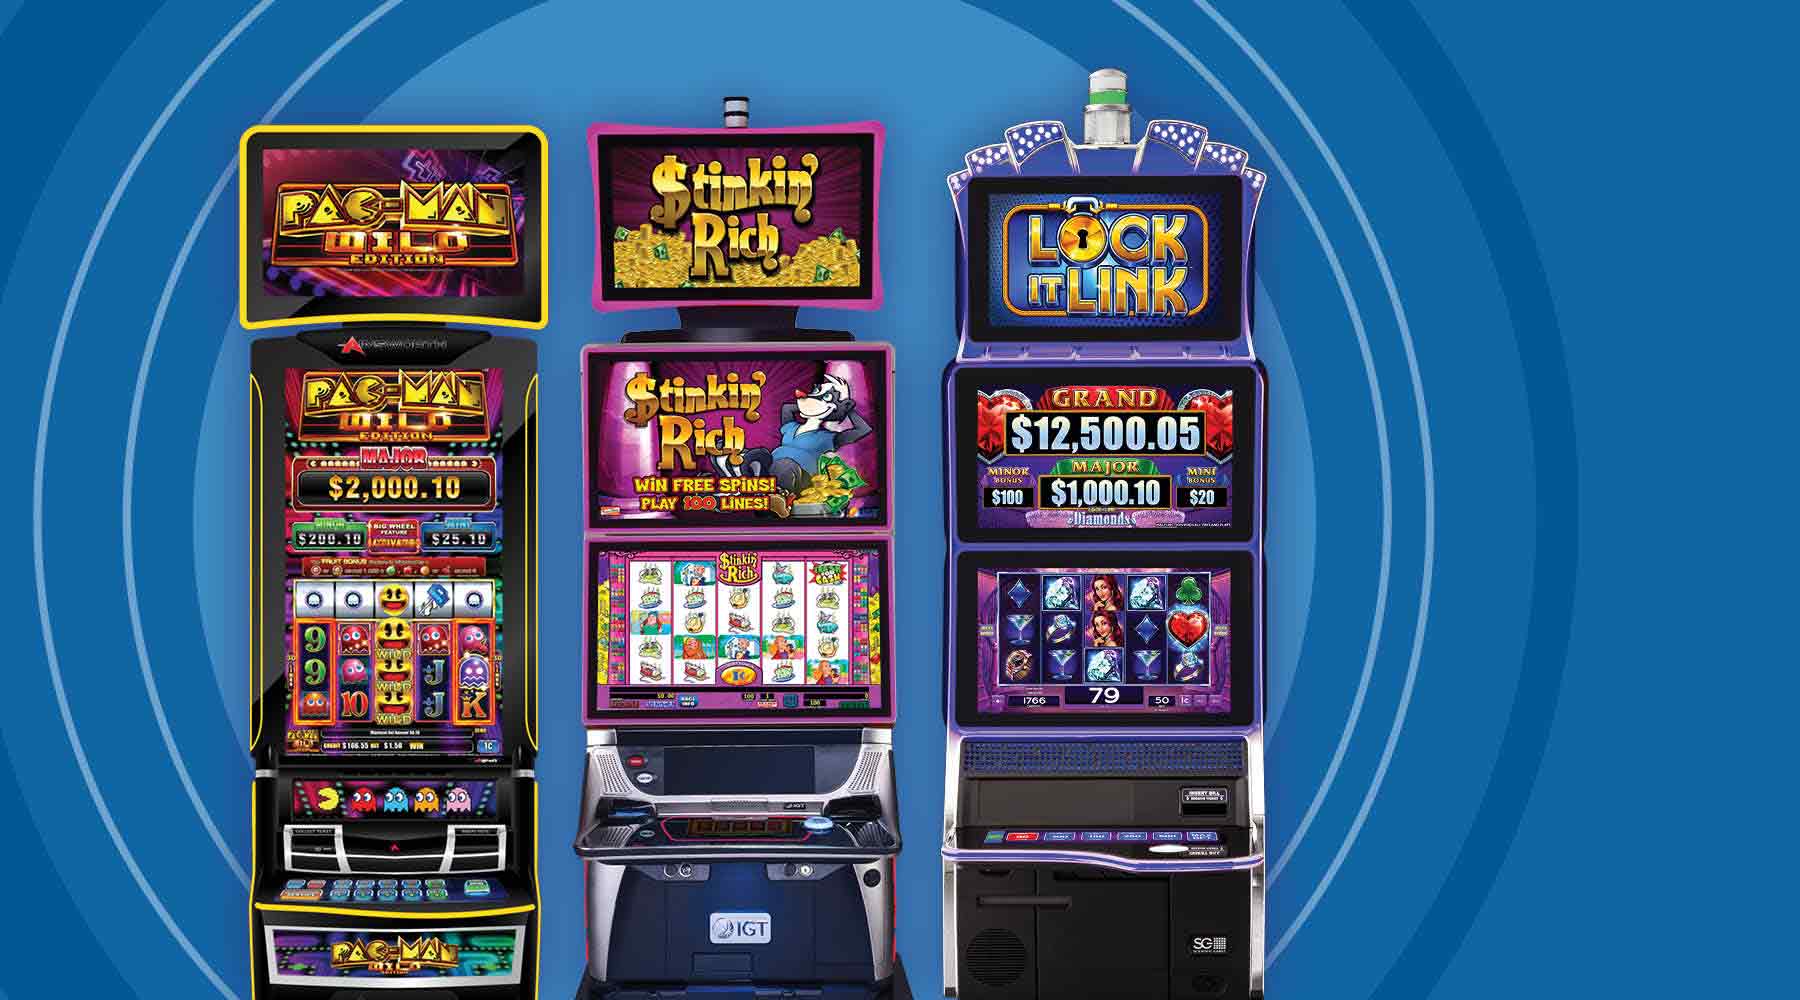 Miami valley gaming slot machines real money